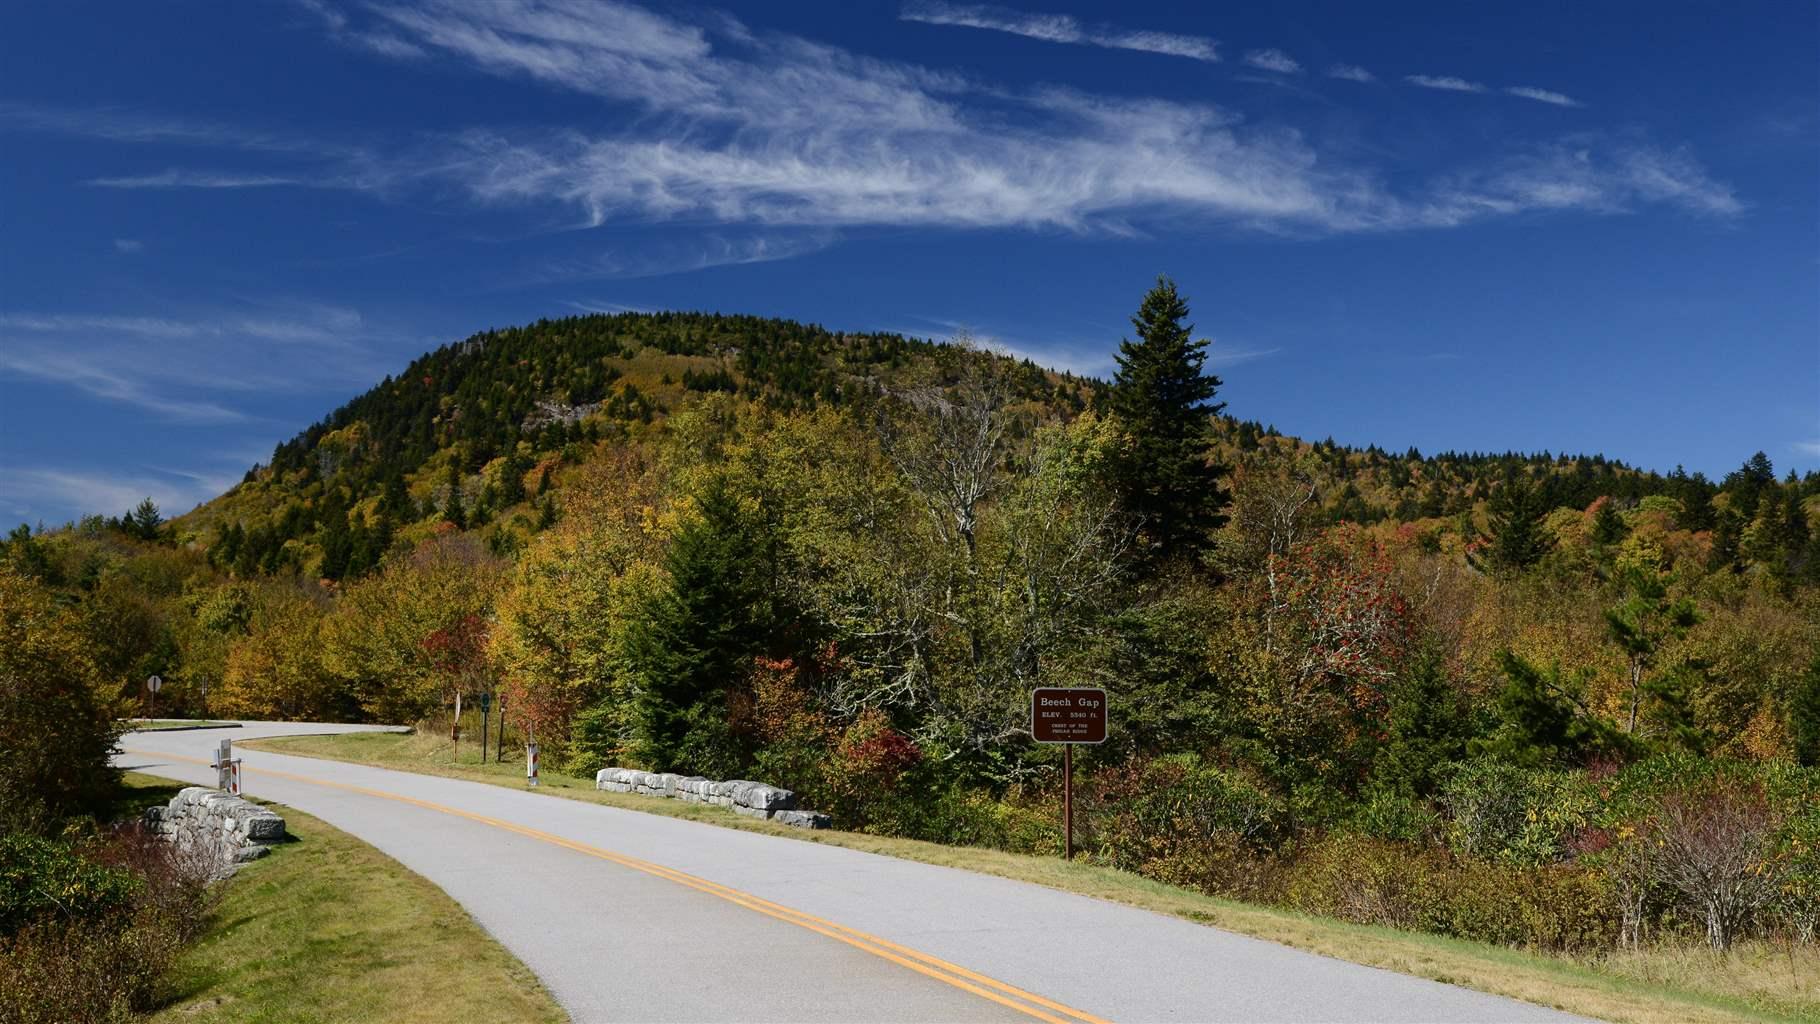 At Milepost 423.3 in North Carolina, the Blue Ridge Parkway passes through Beech Gap at an elevation of 5,340 ft.